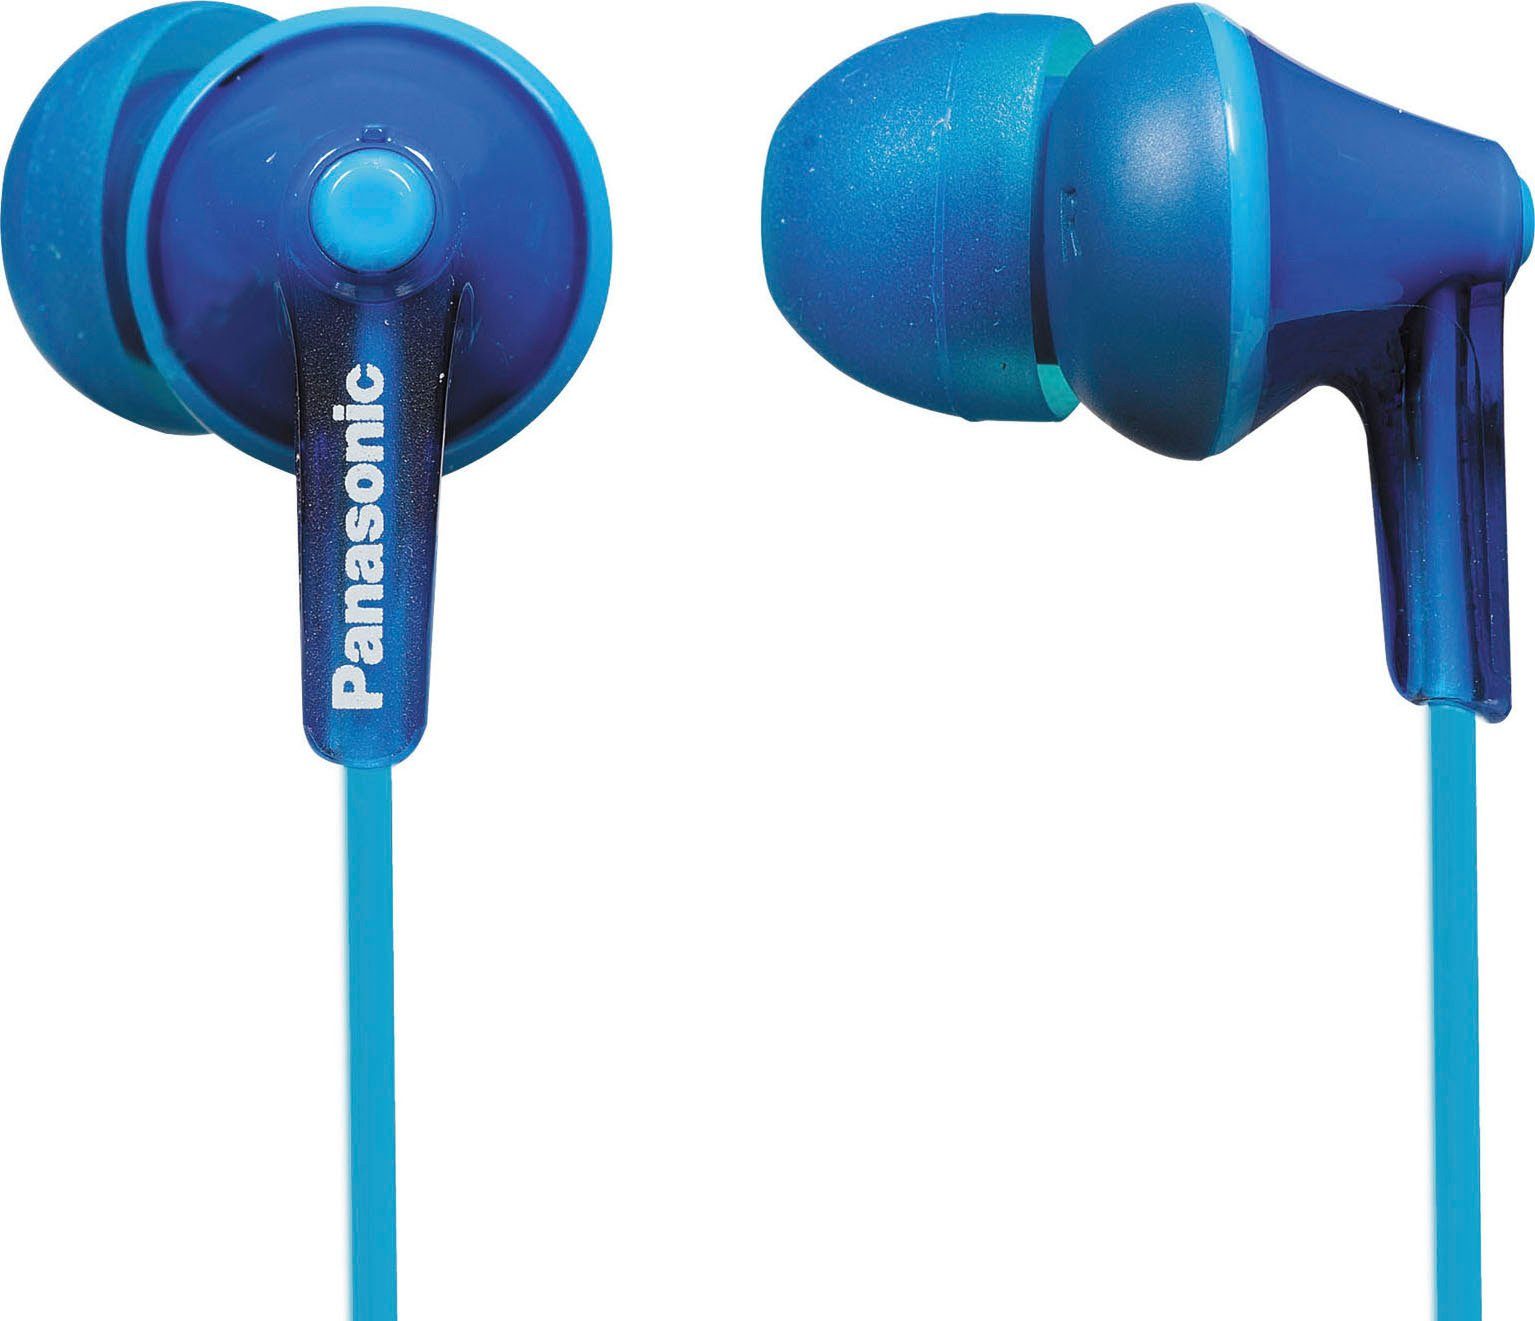 RP-HJE125 Panasonic blau In-Ear-Kopfhörer